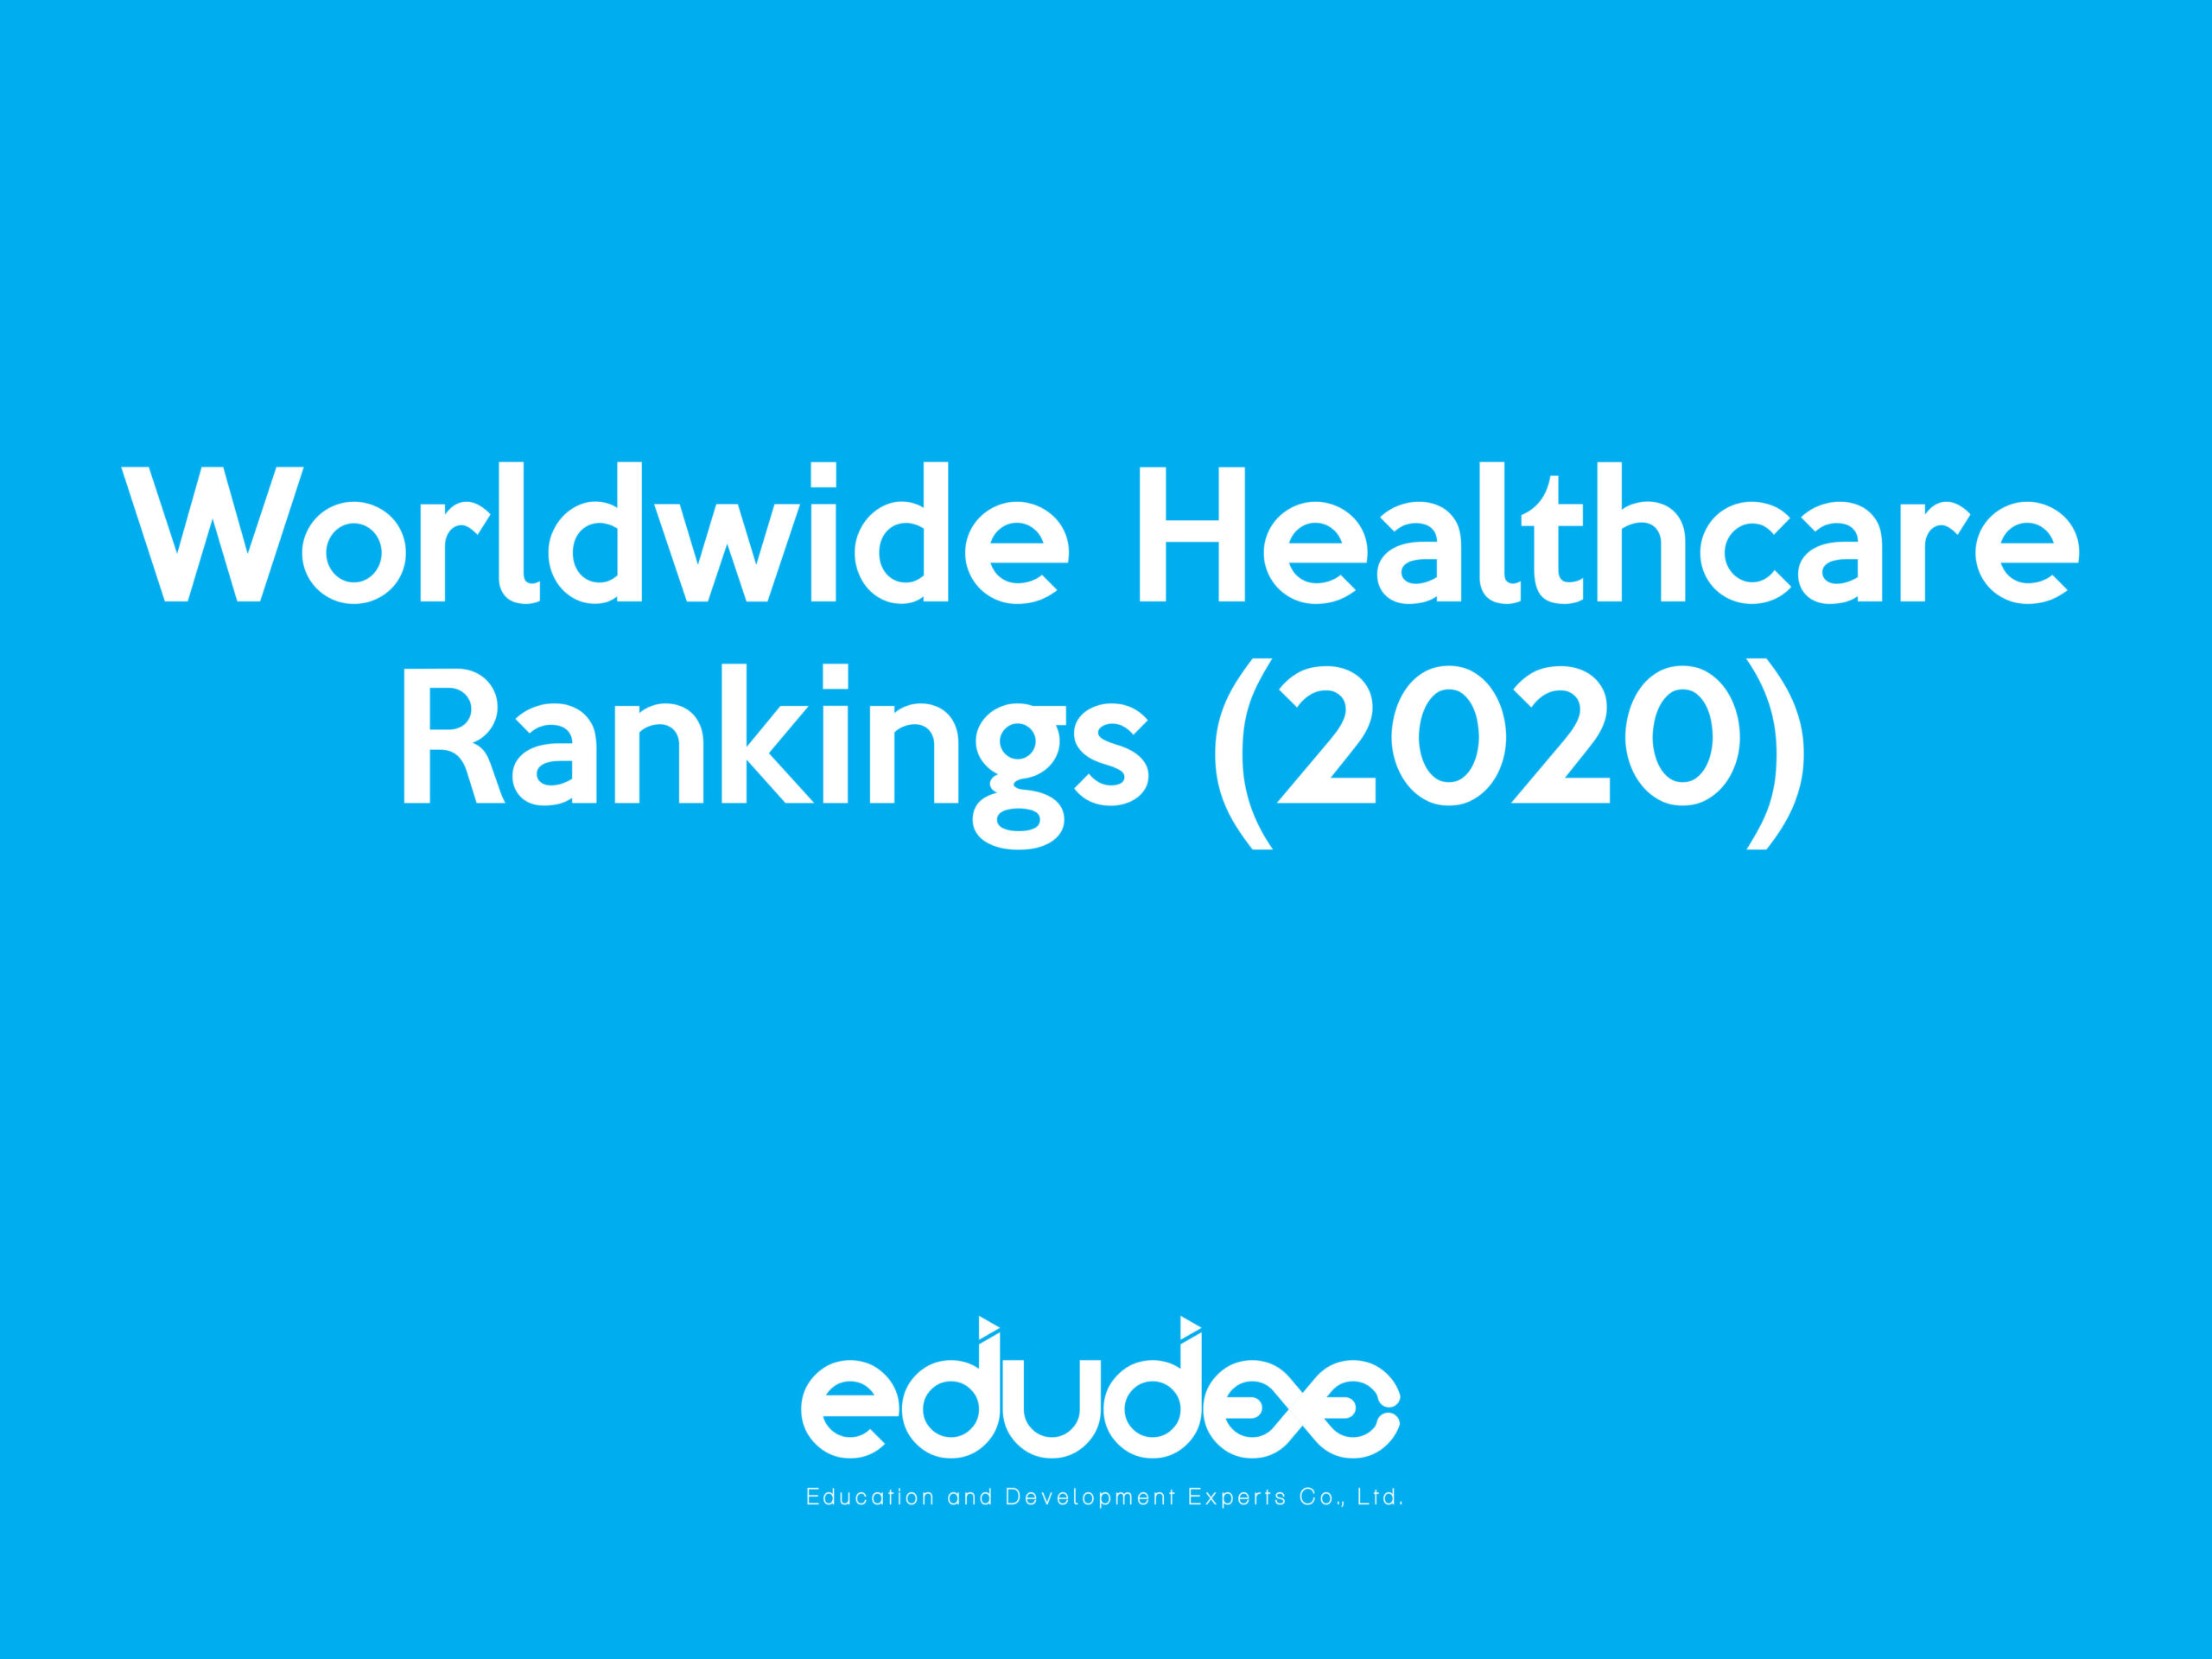 Worldwide Healthcare Ranking